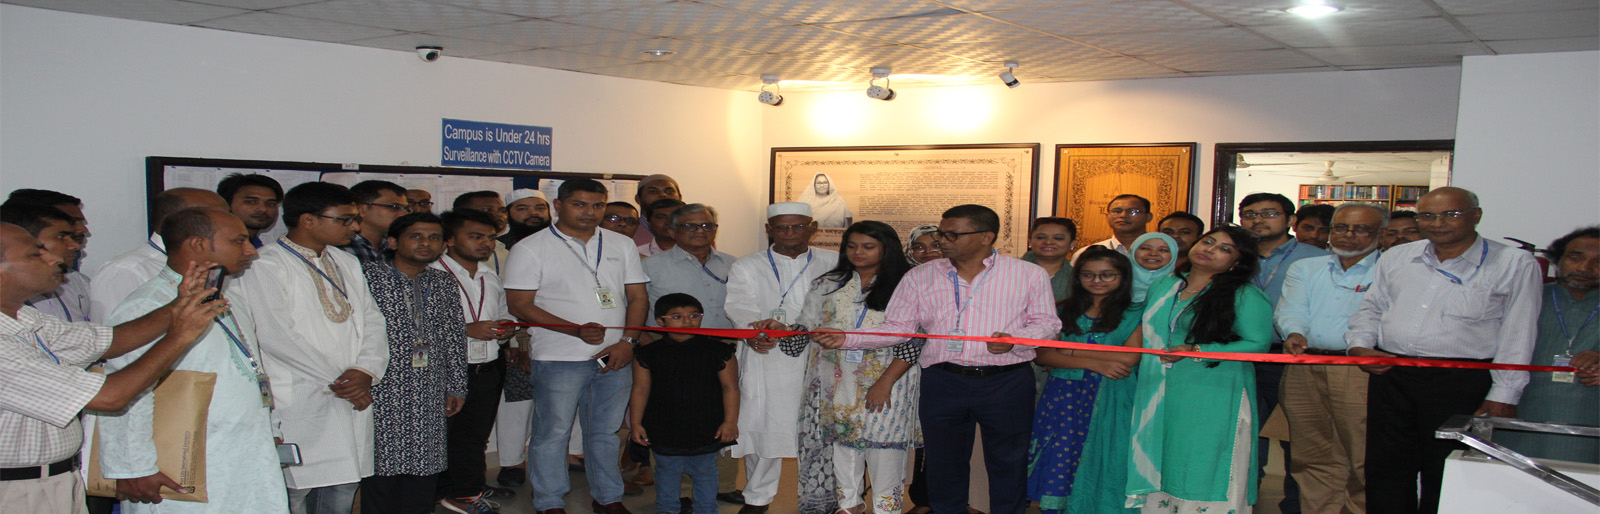 Grand opening of "Ratnagarva Alhaj Begum Ashrafunessa Library" 